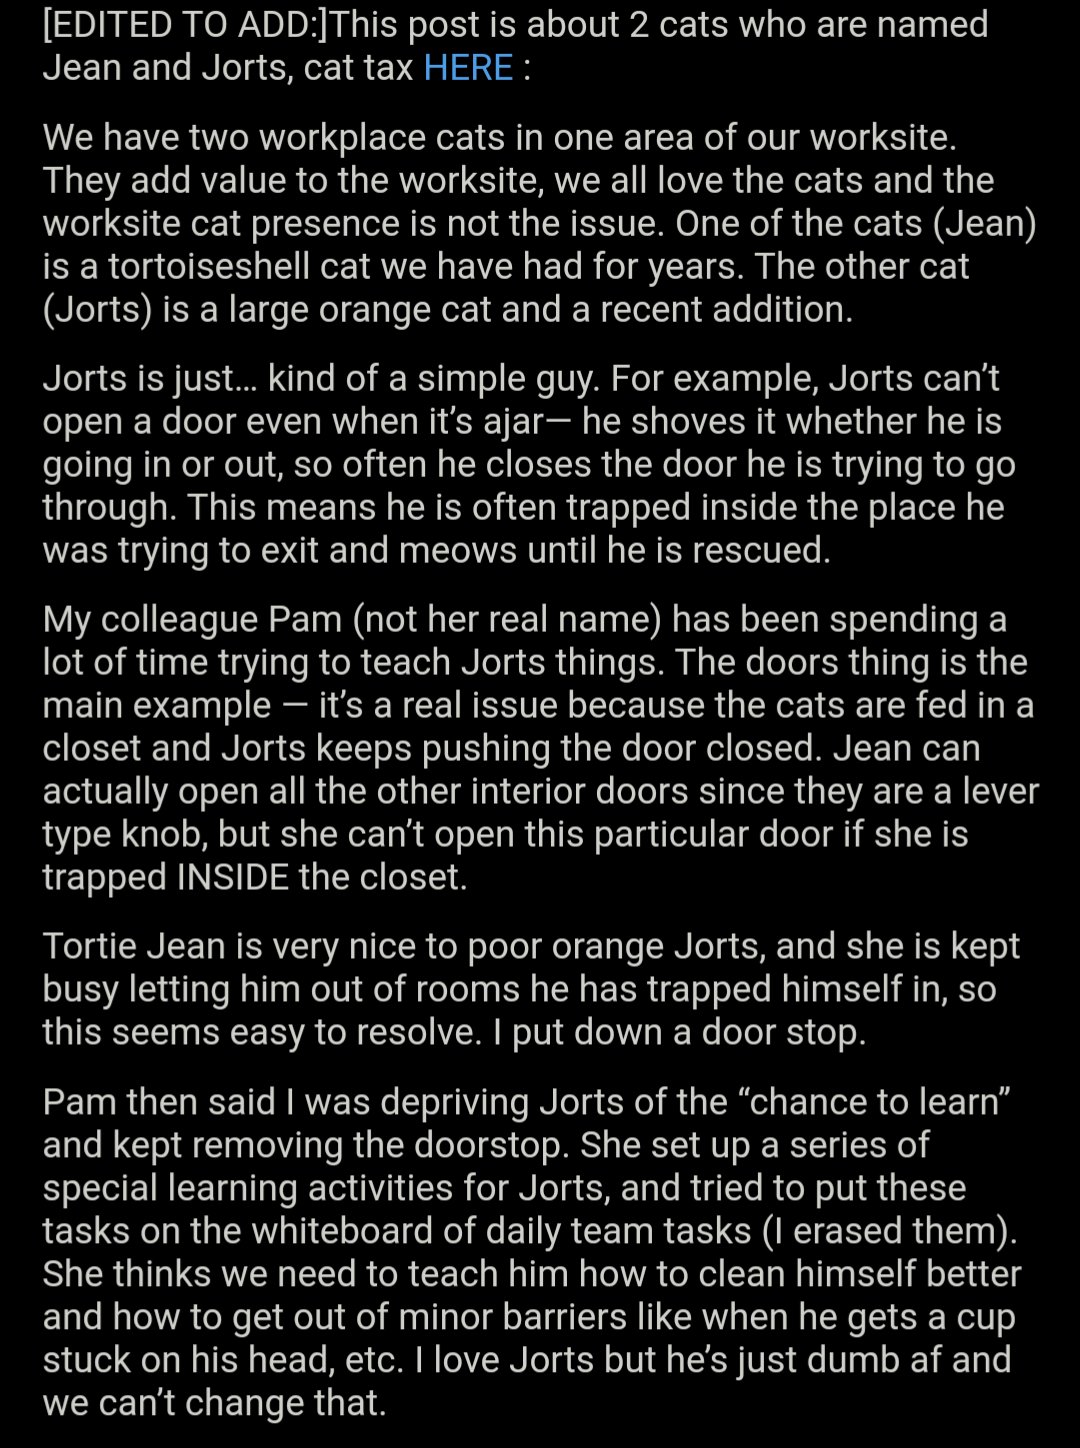 AITA reddit thread on two cats, Jean and Jorts